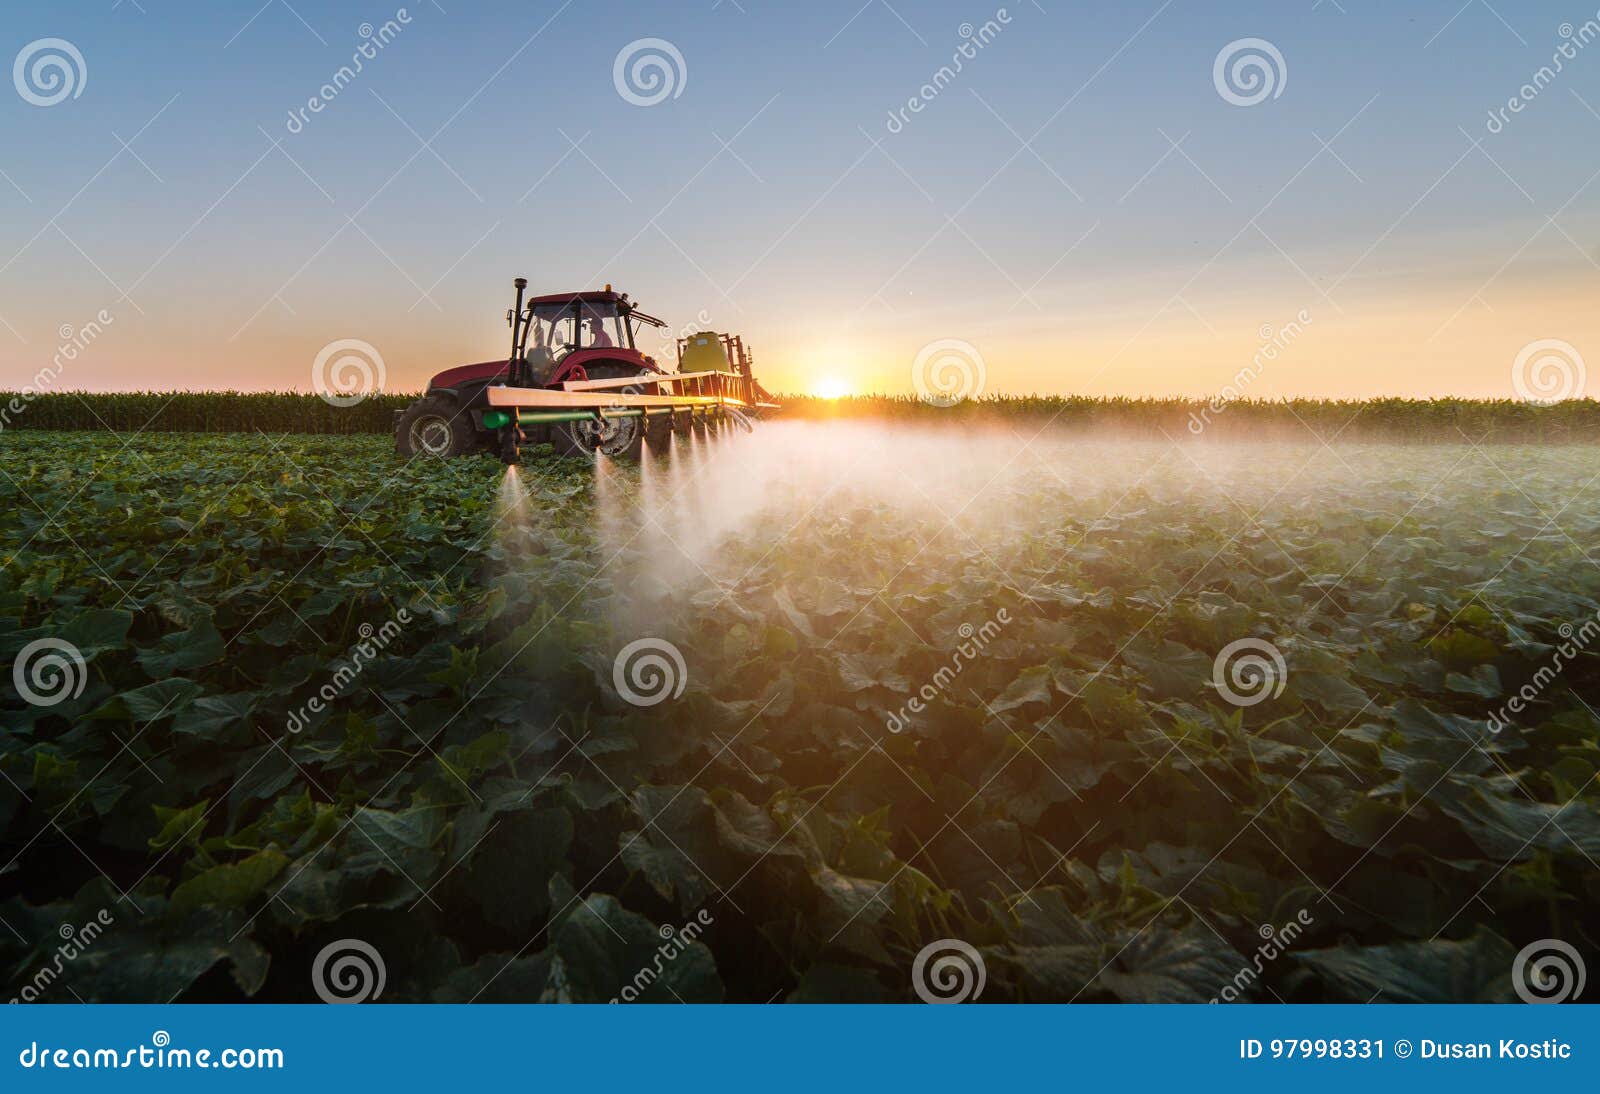 tractor spraying soybean field